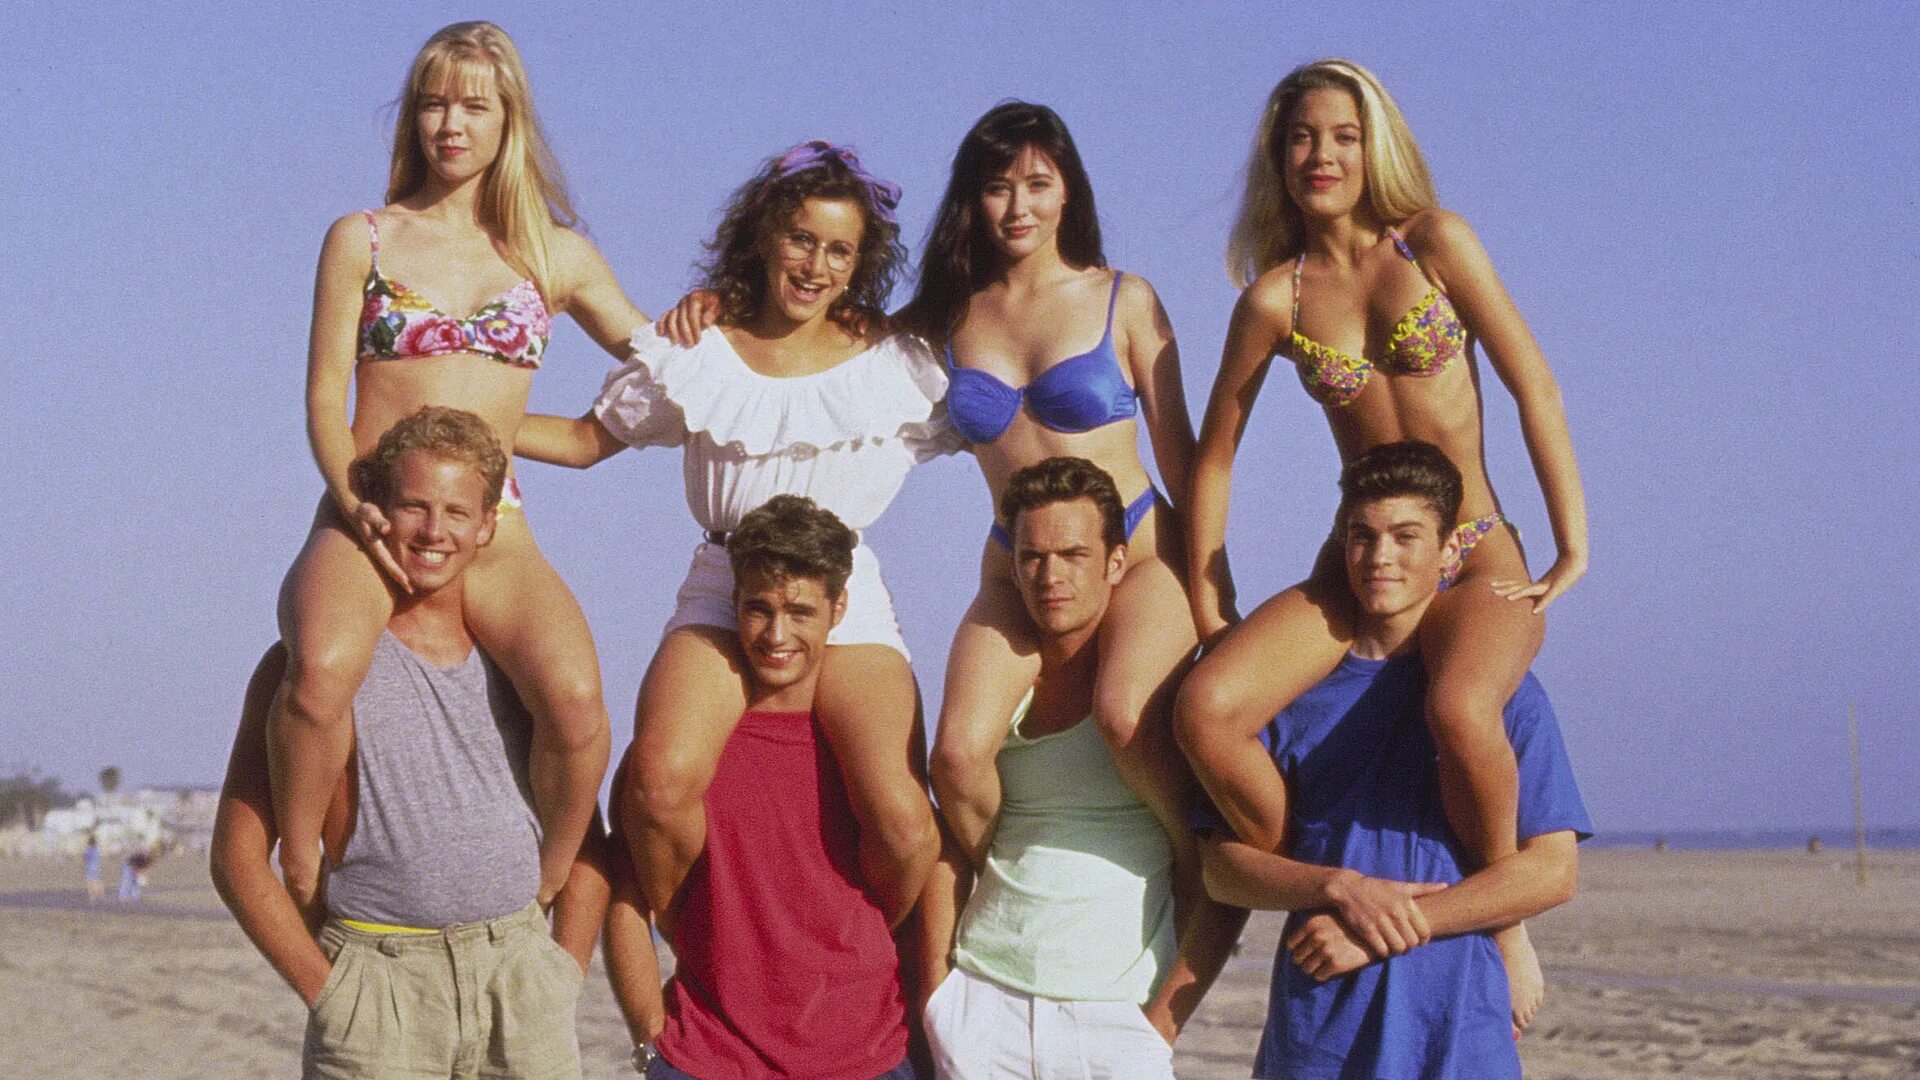 Проблемы 2000 х. Беверли-Хиллз 90210 бренда и Келли.